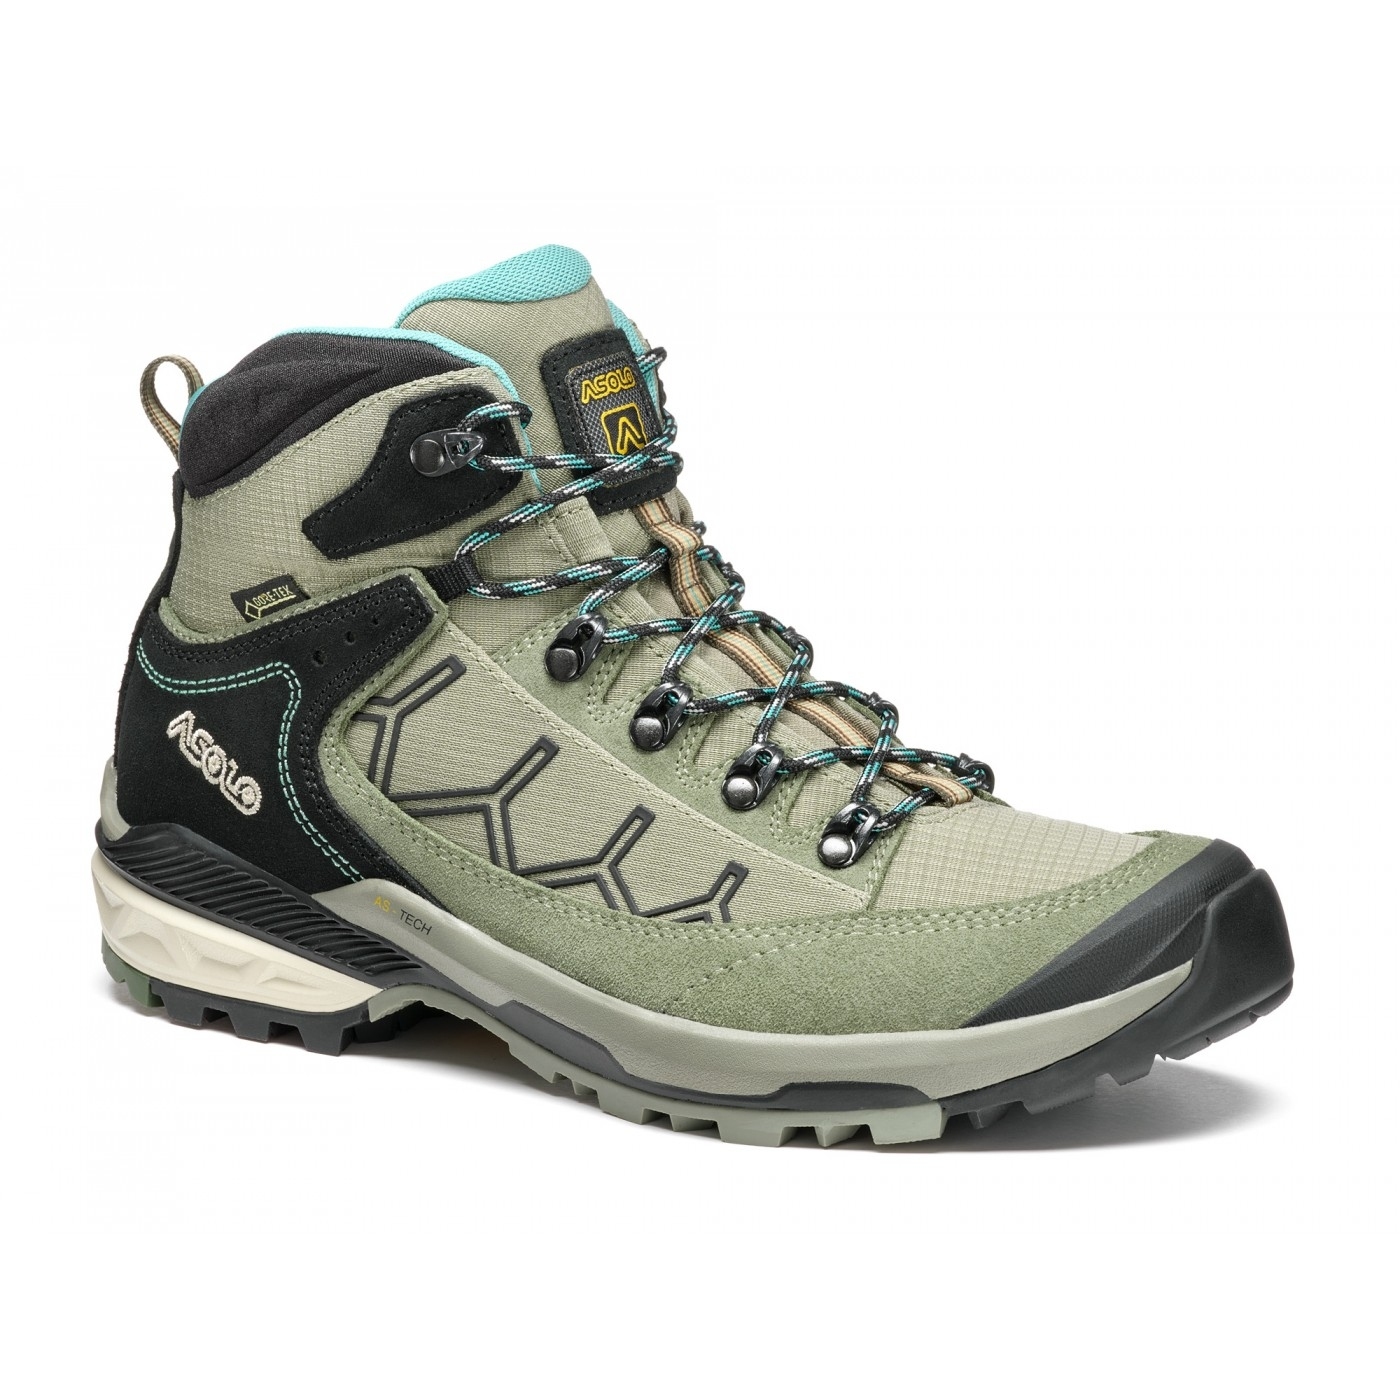 Asolo Falcon Evo GV Women's Hiking Boots - dry weeds/aqua green | BIKE24